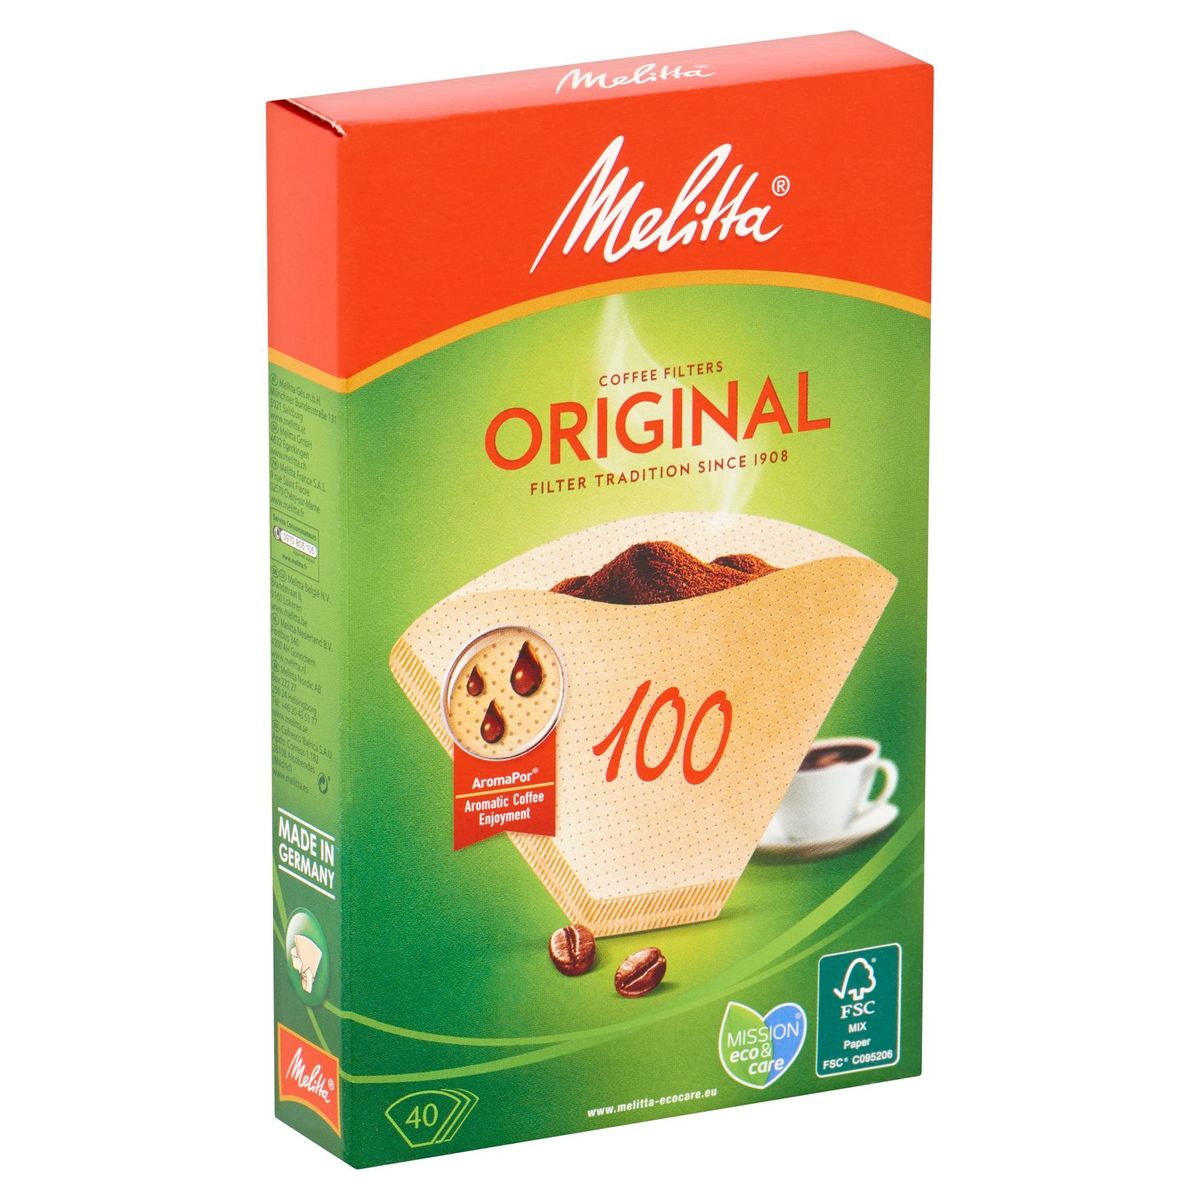 Melitta Original Coffee Filters 100 / 40 Pièces